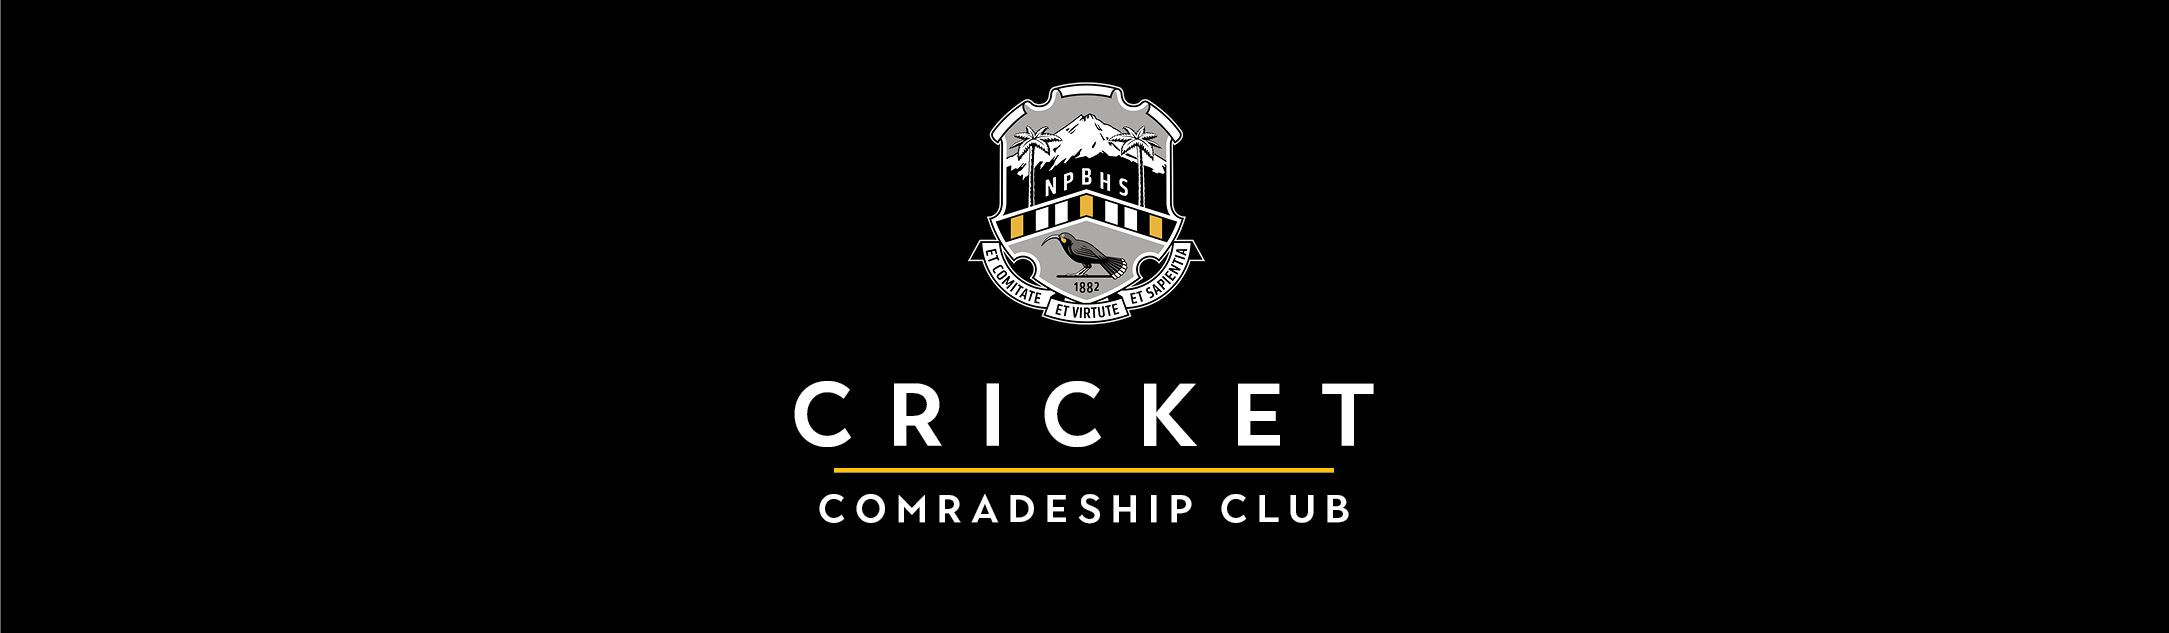 Cricket Comradeship Club Logo